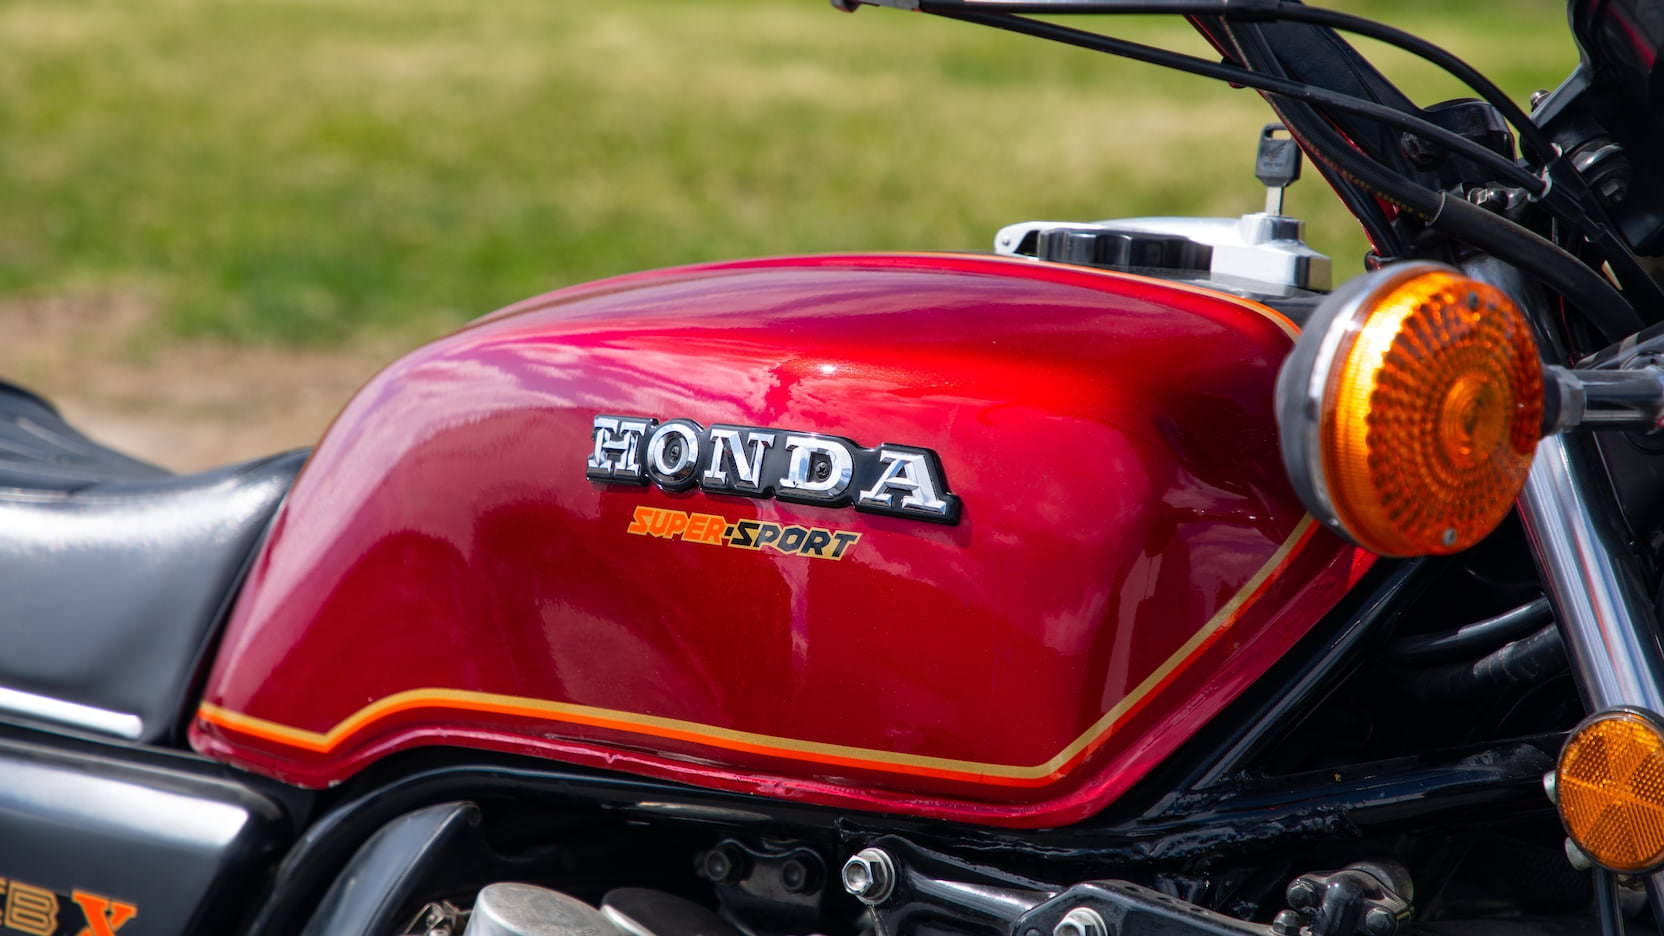 Honda CBX - A Six-Cylinder Dream For Motorcycle Romantics - Dyler